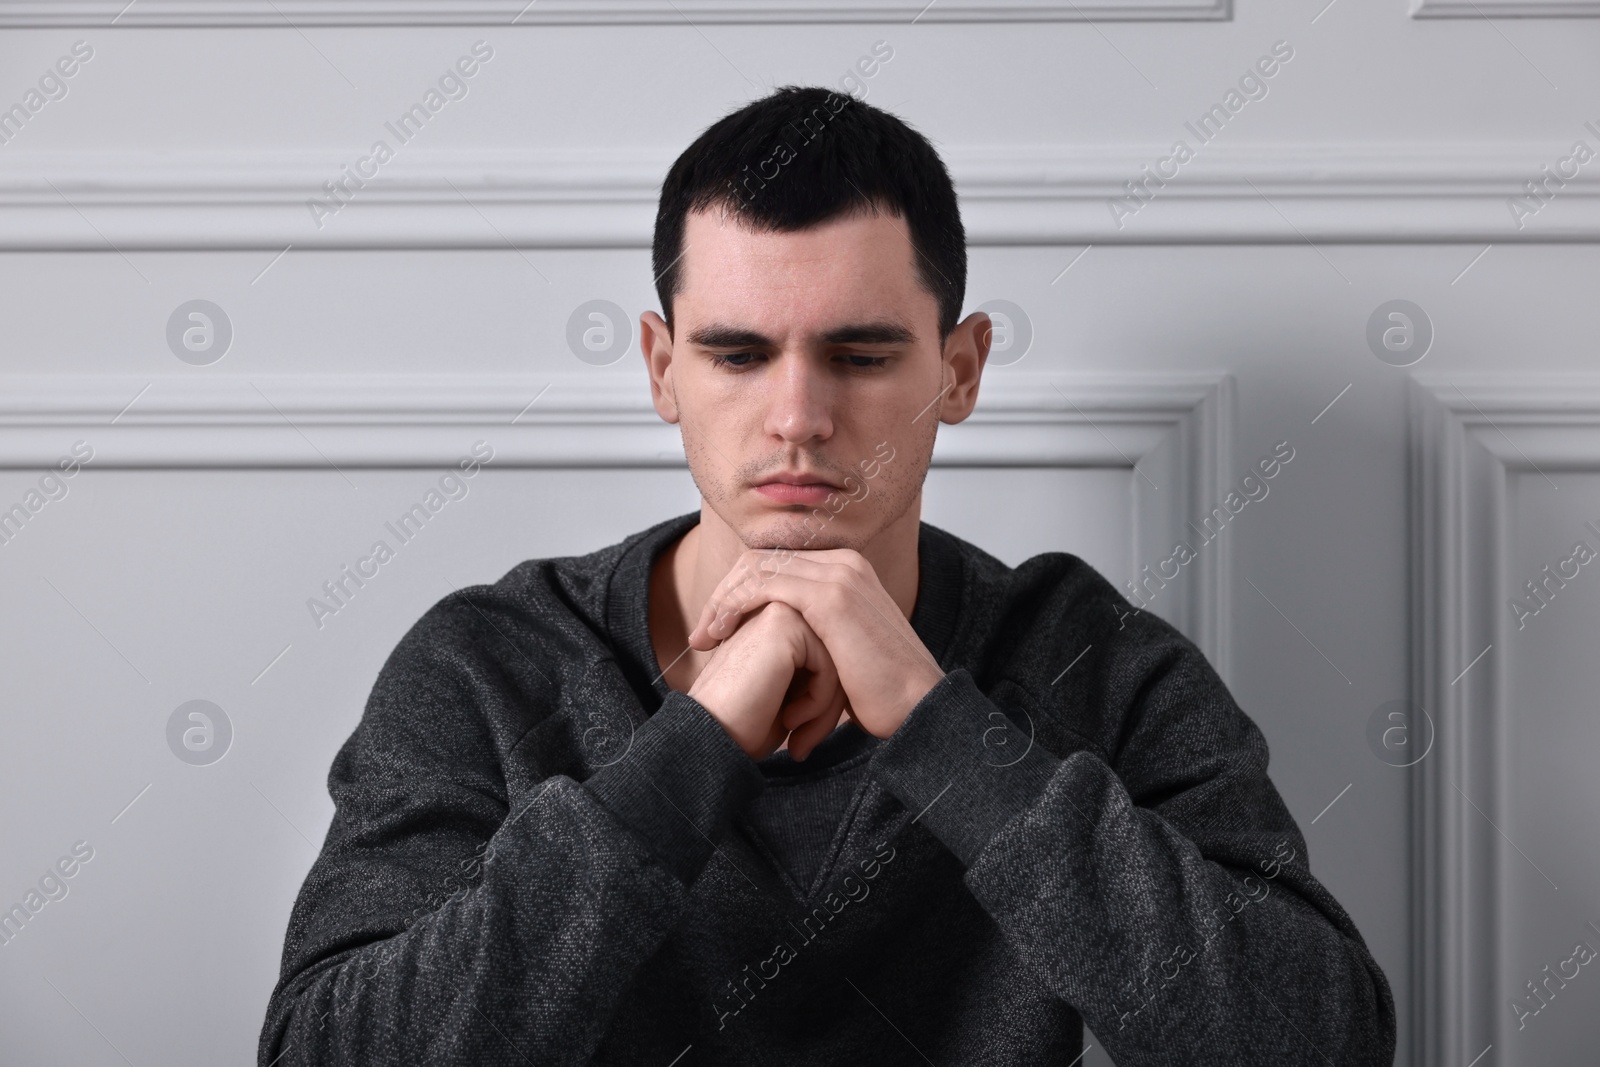 Photo of Sad man sitting near white wall indoors